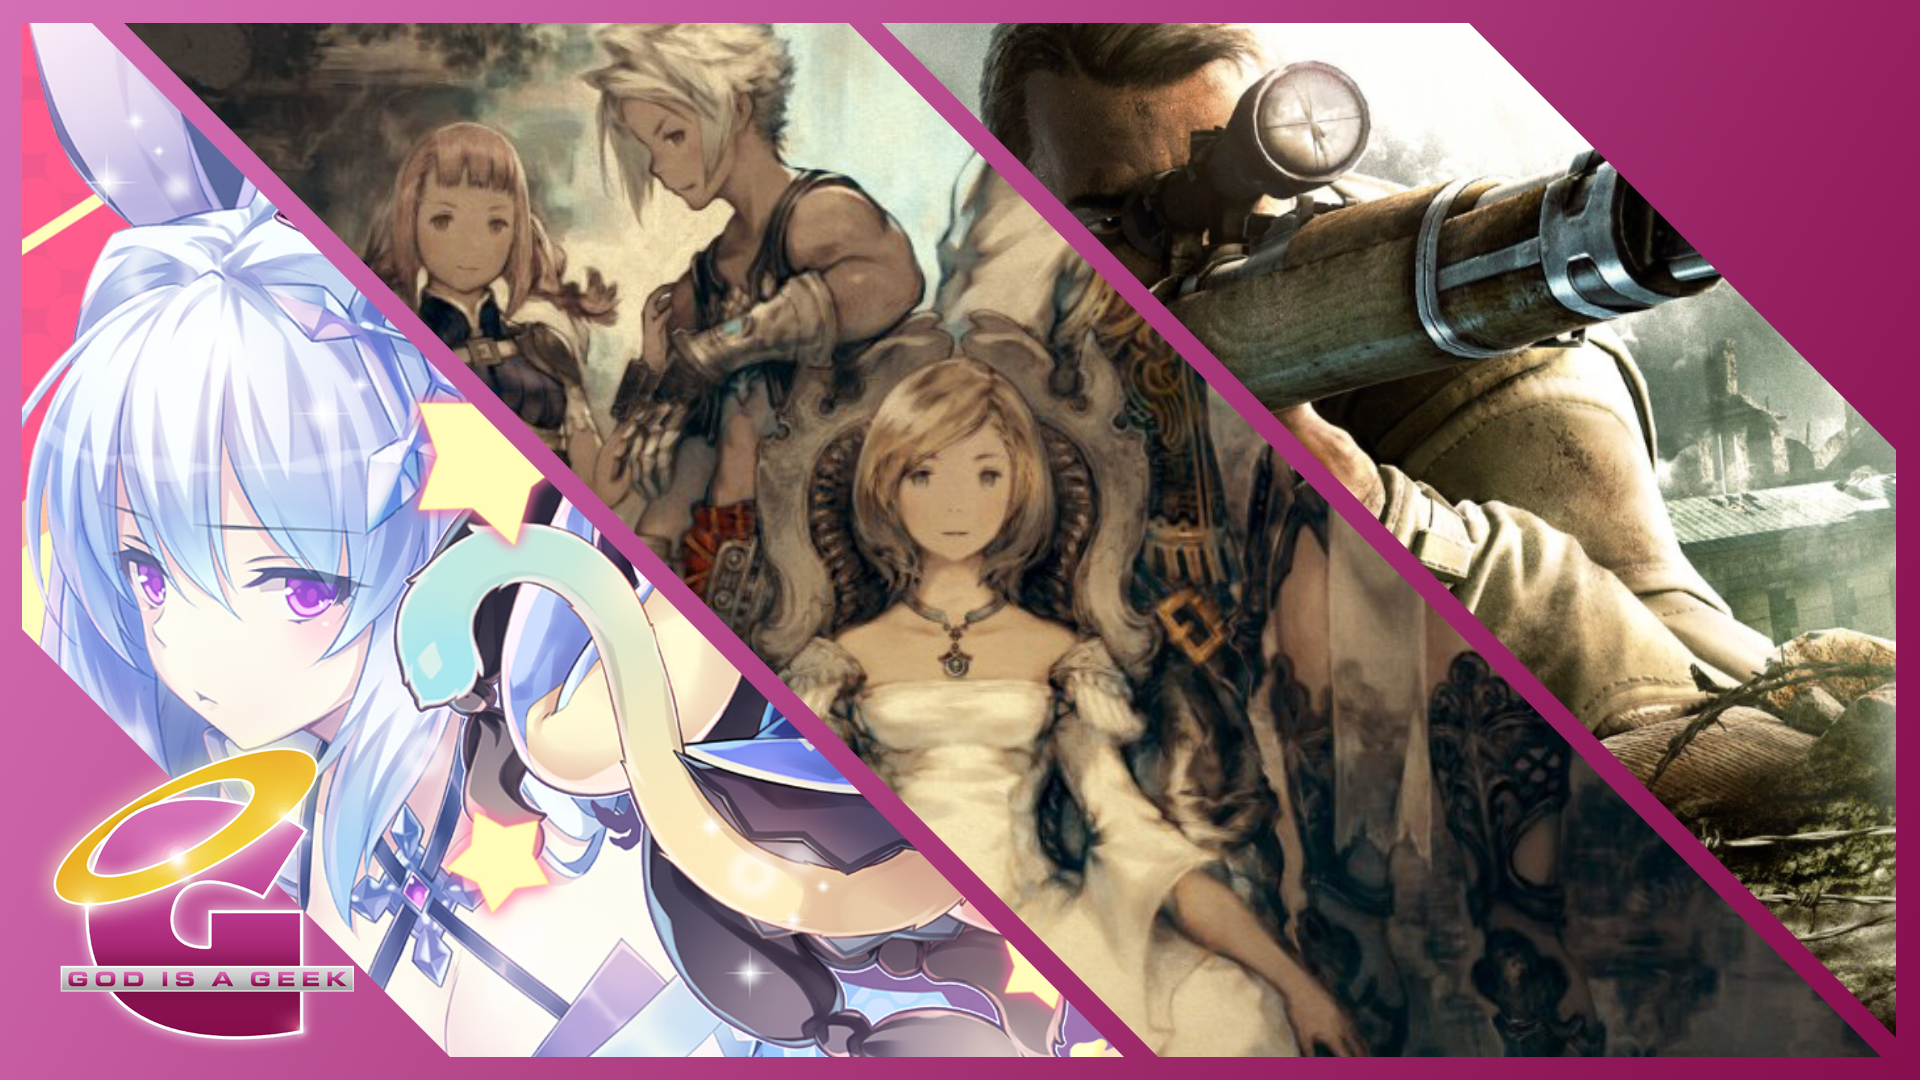 Final Fantasy XII: The Zodiac Age Review (Switch)